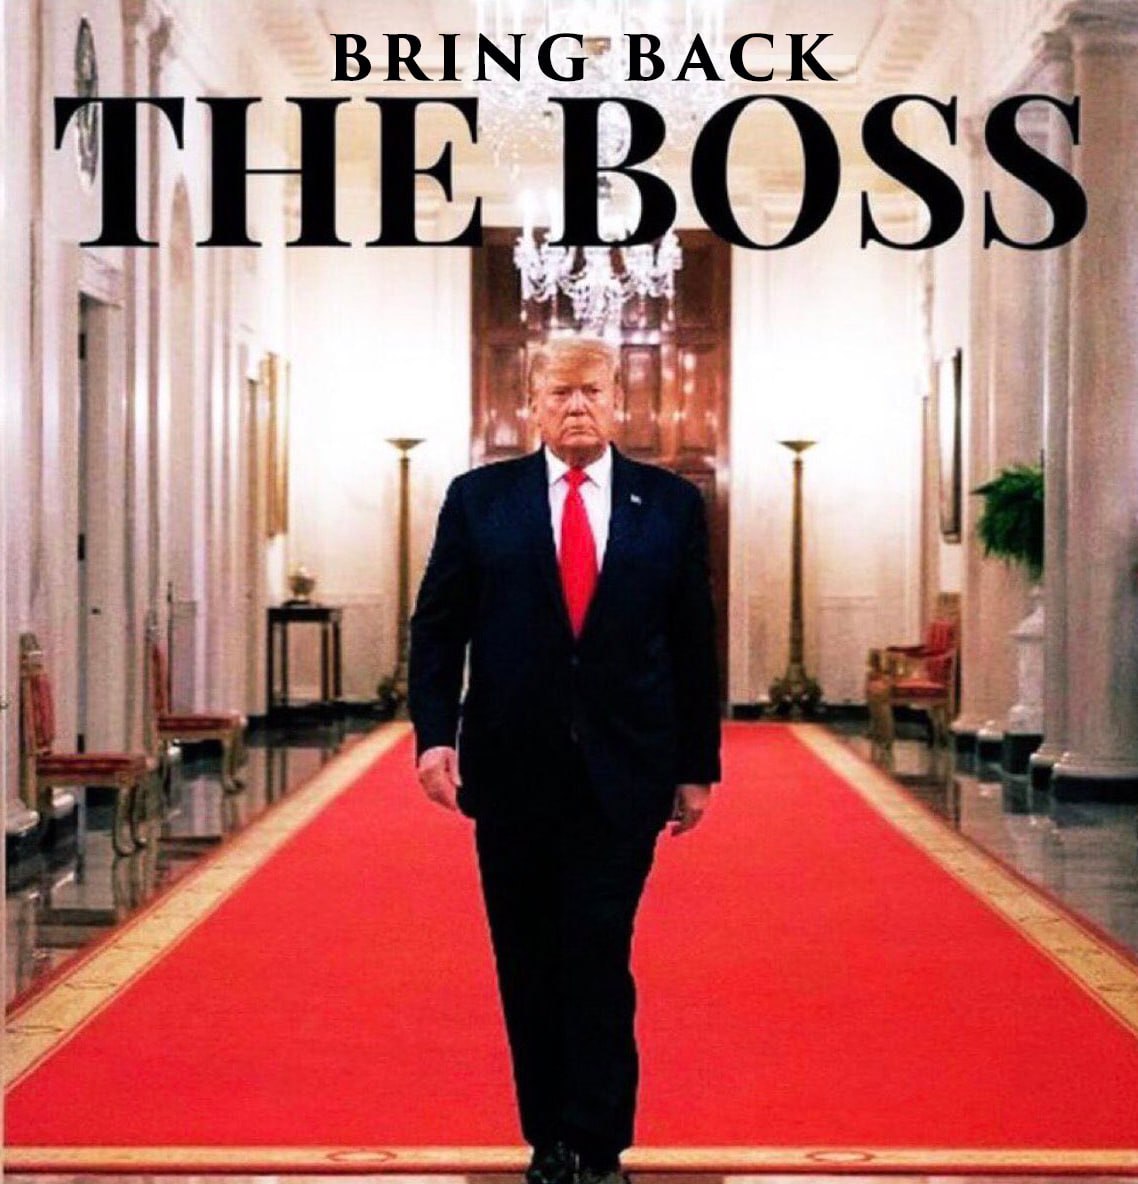 Bring Back the Boss, President Donald J Trump